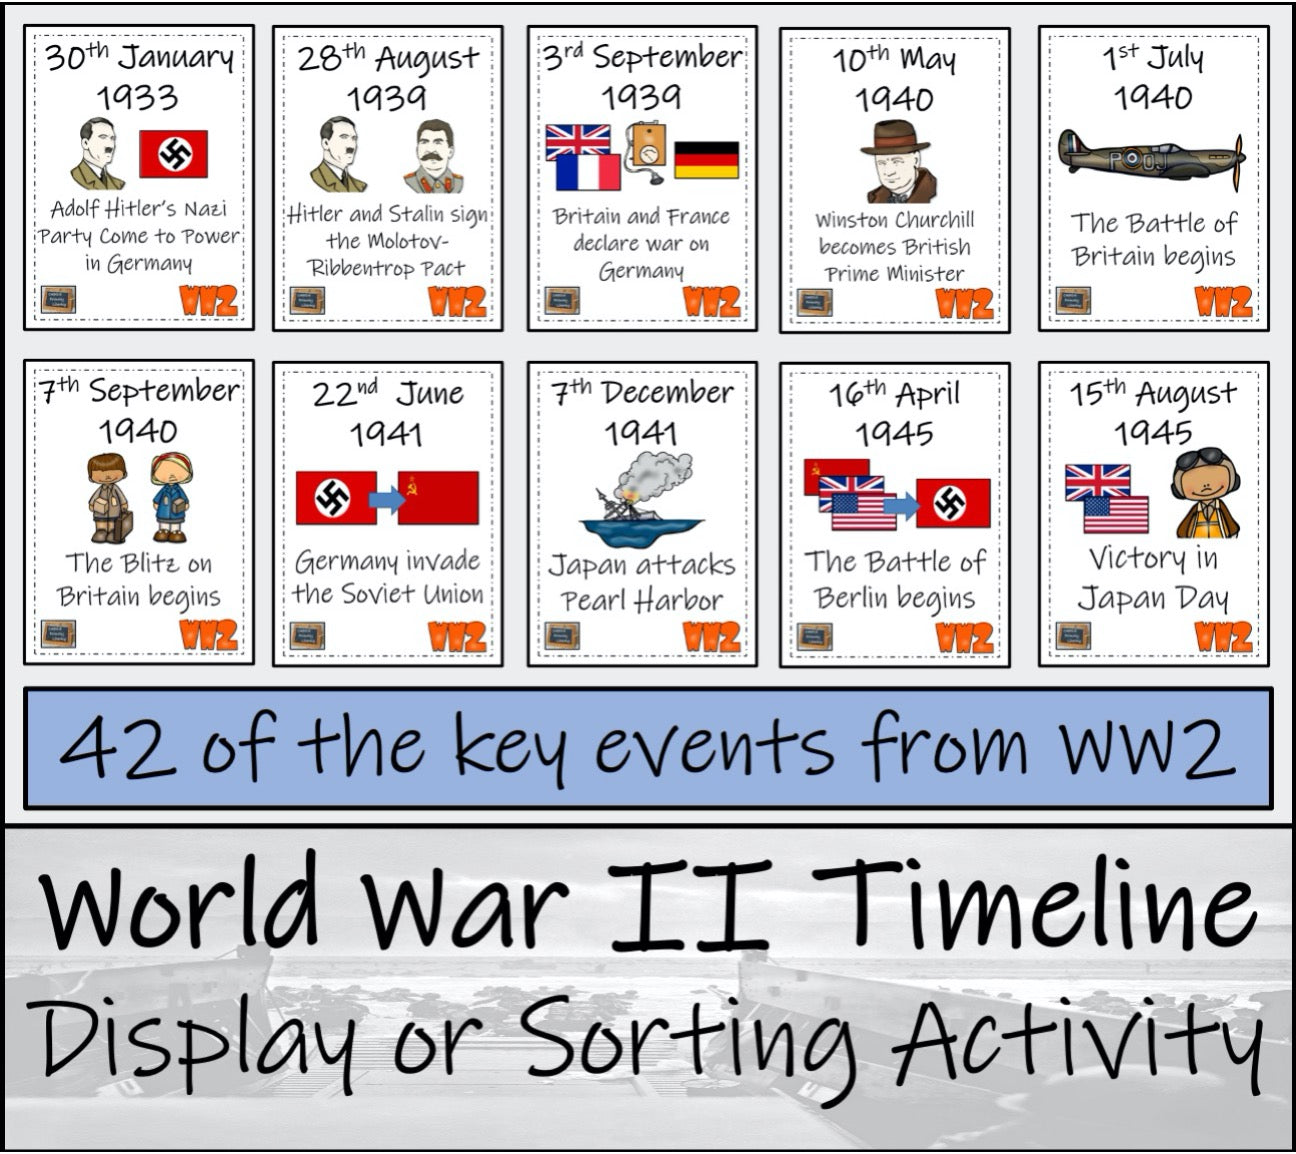 World War II Mega Bundle of Activities | 5th Grade & 6th Grade